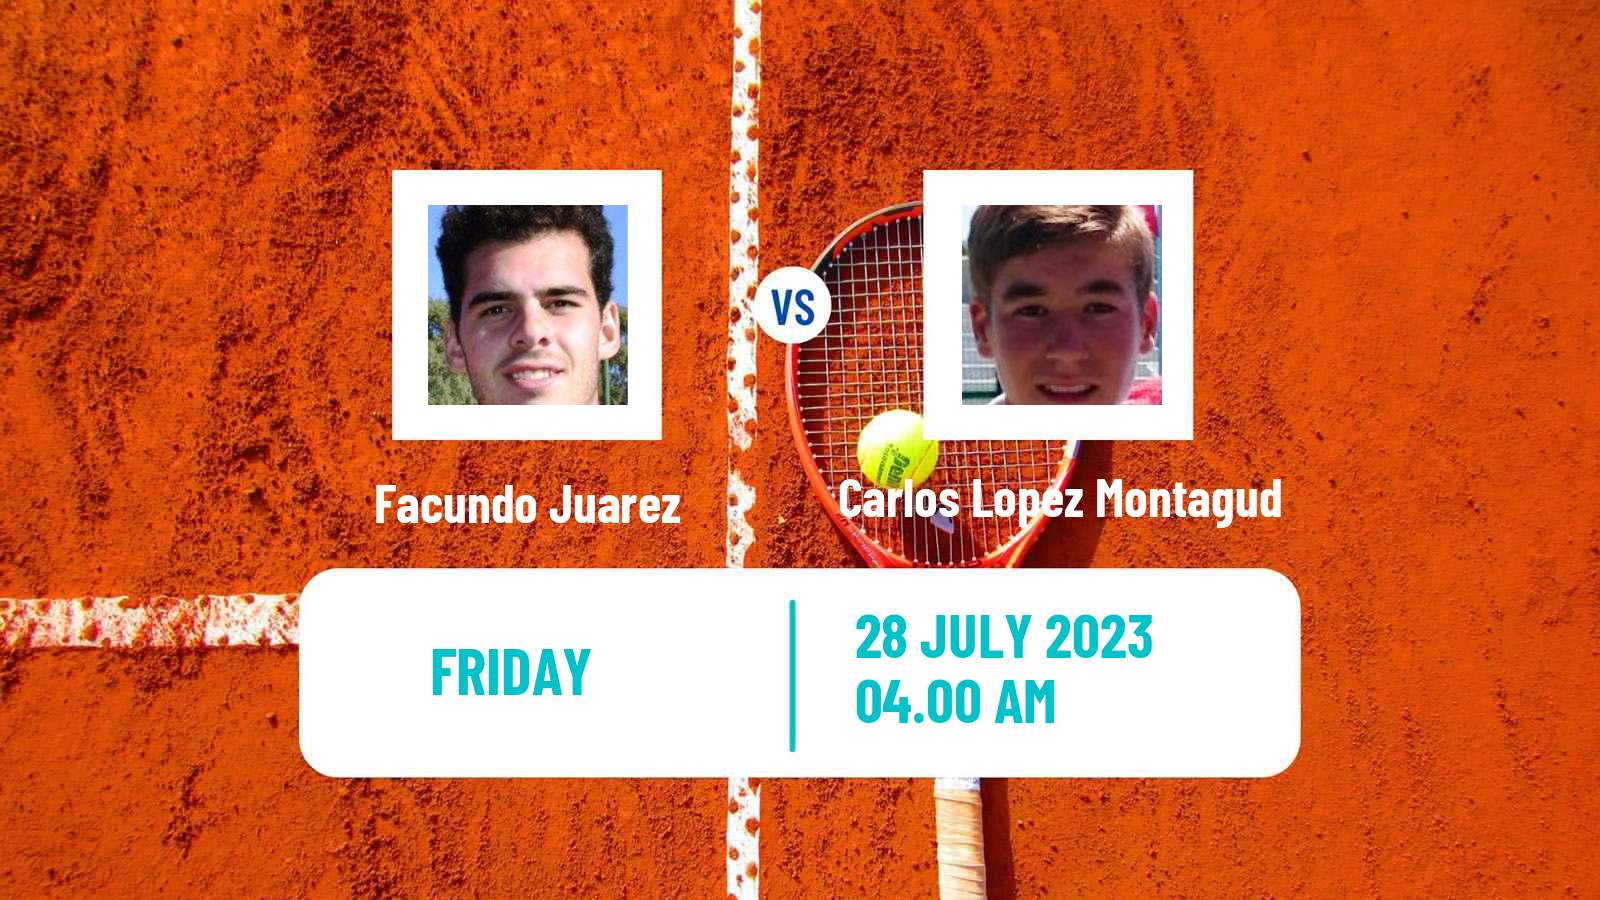 Tennis ITF M25 Denia Men Facundo Juarez - Carlos Lopez Montagud